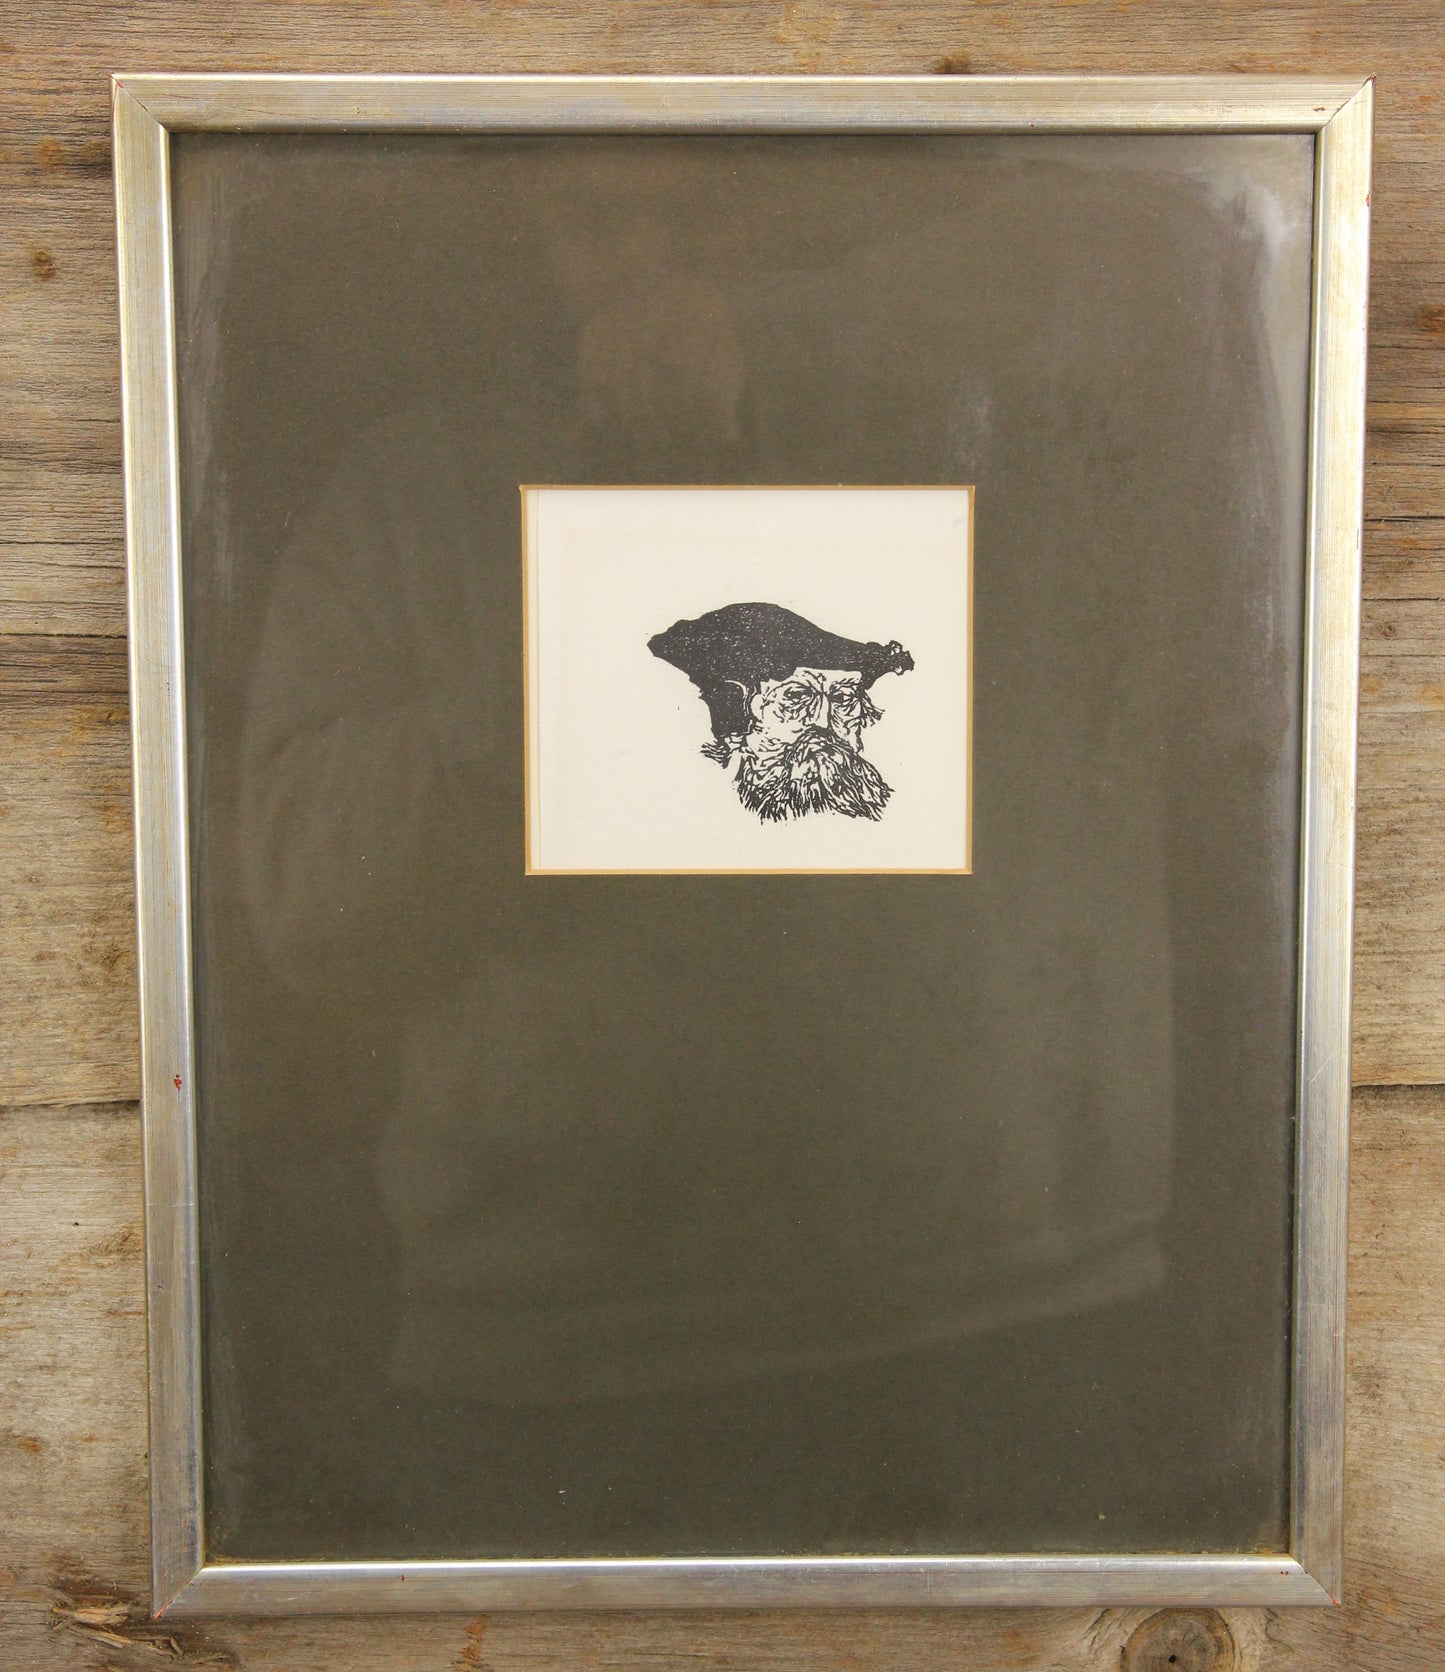 Framed Wood Engraving Titled "Bearded Man" by Gerlad G. Boyce - 11.75 x 14.75"